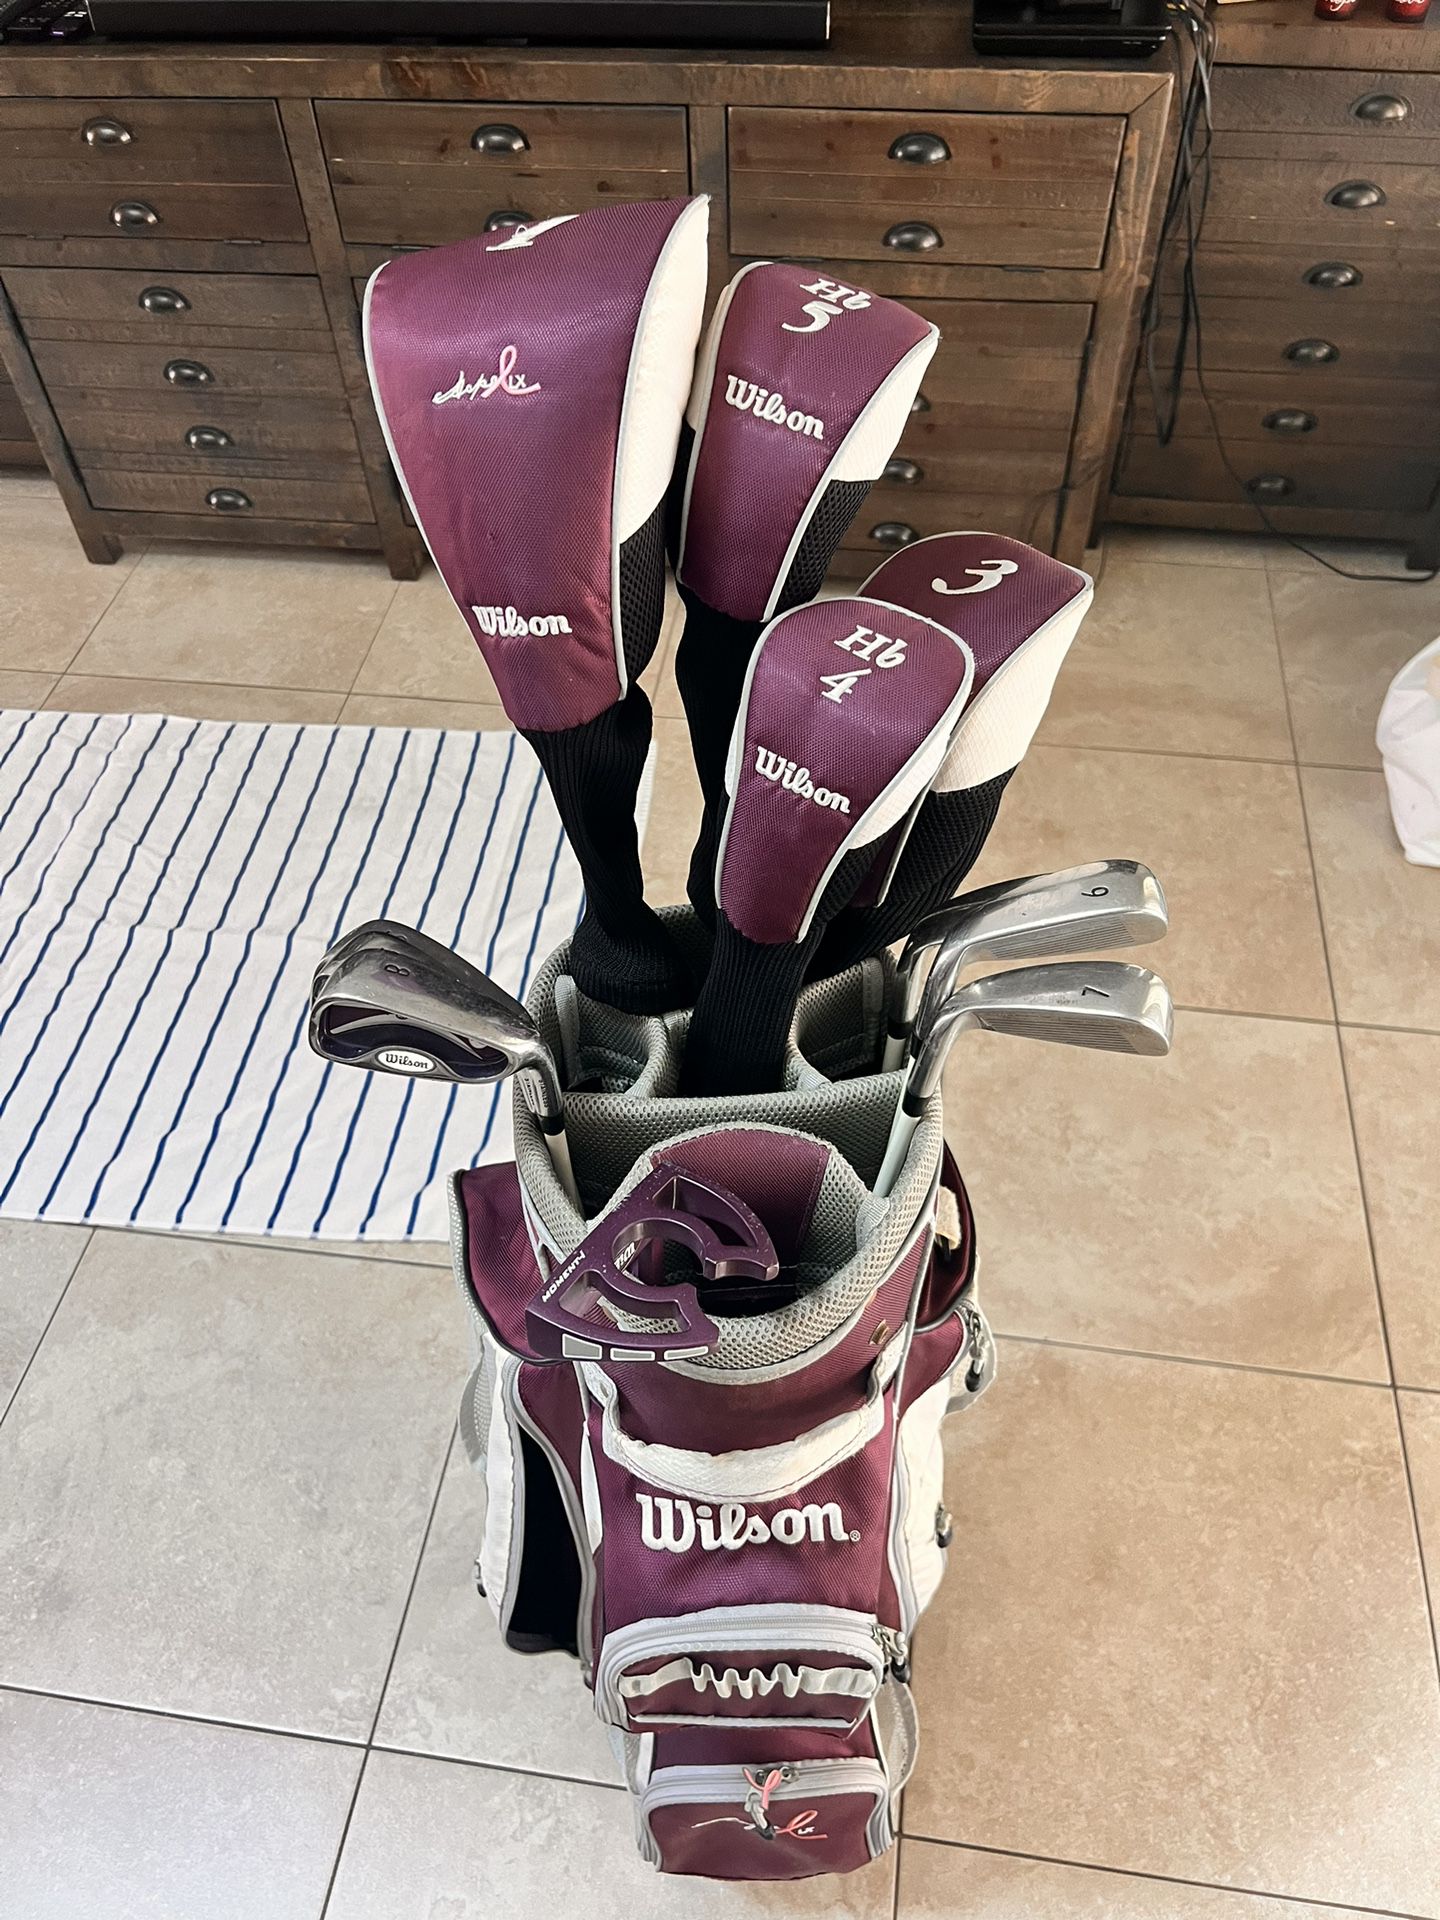 Wilson Golf Clubs & Bag